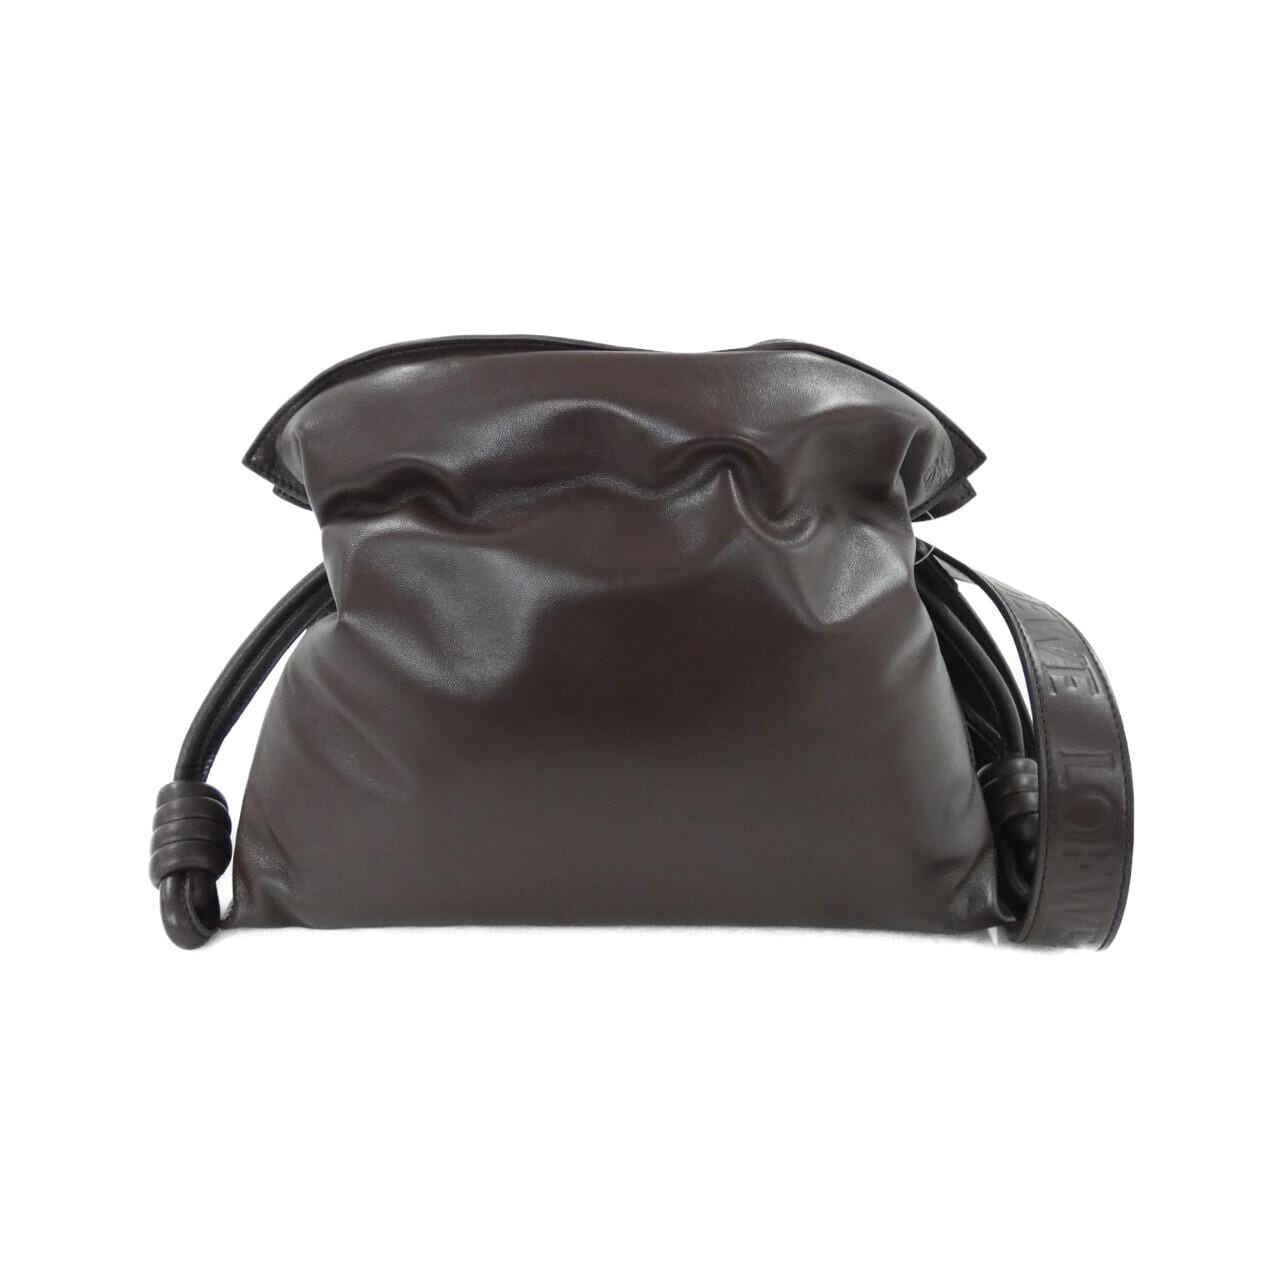 [BRAND NEW] Loewe Puffer Flamenco Clutch A411FC1X67 Shoulder Bag